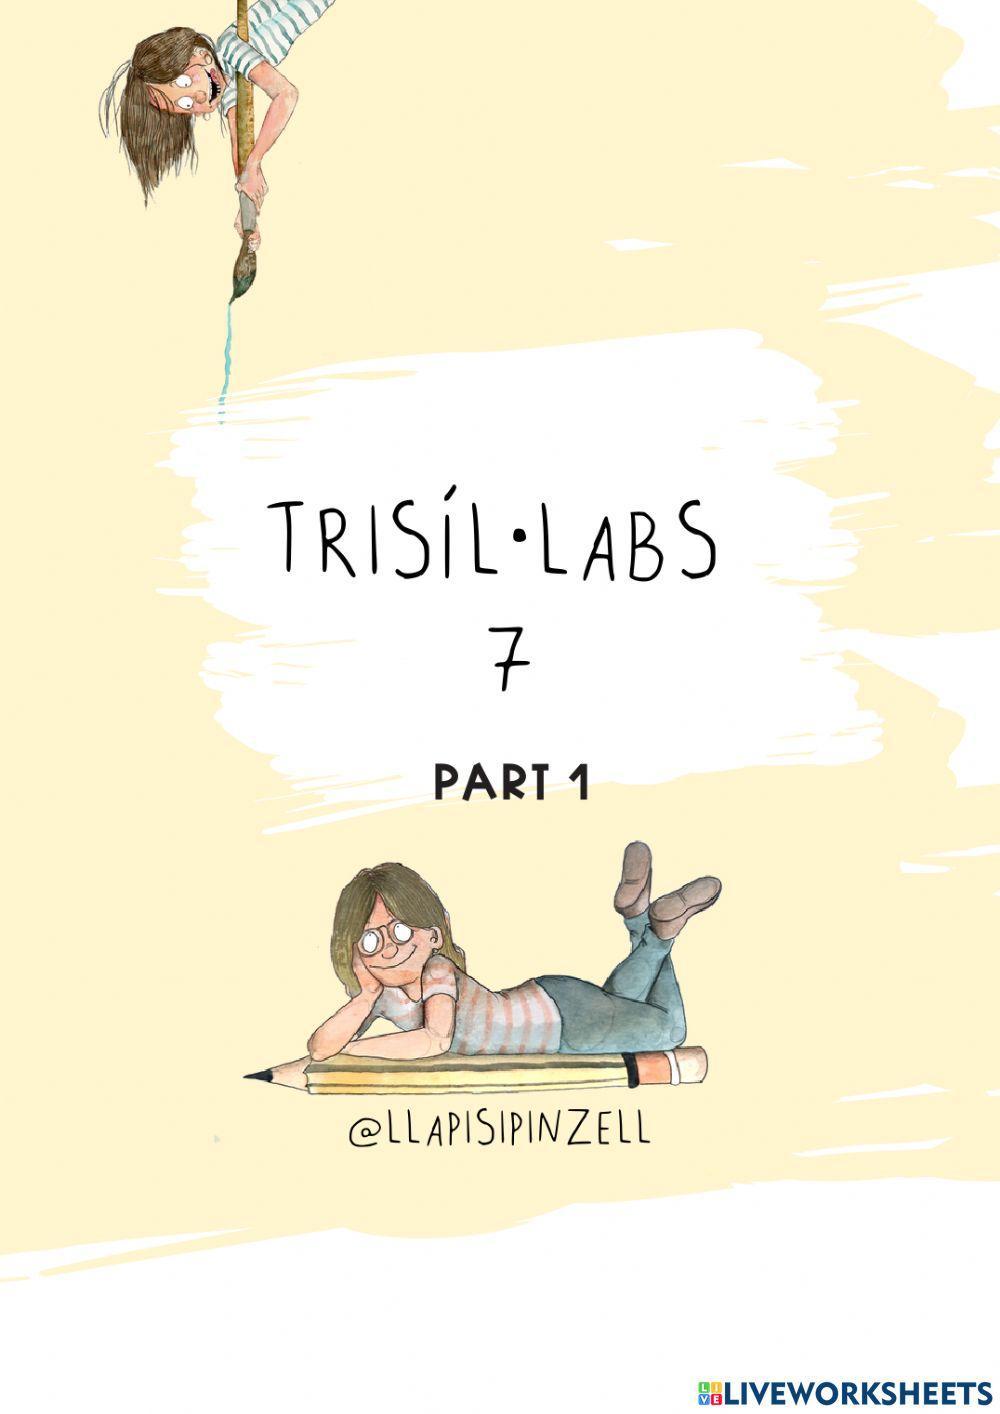 Trisíl·labs 7 primera part